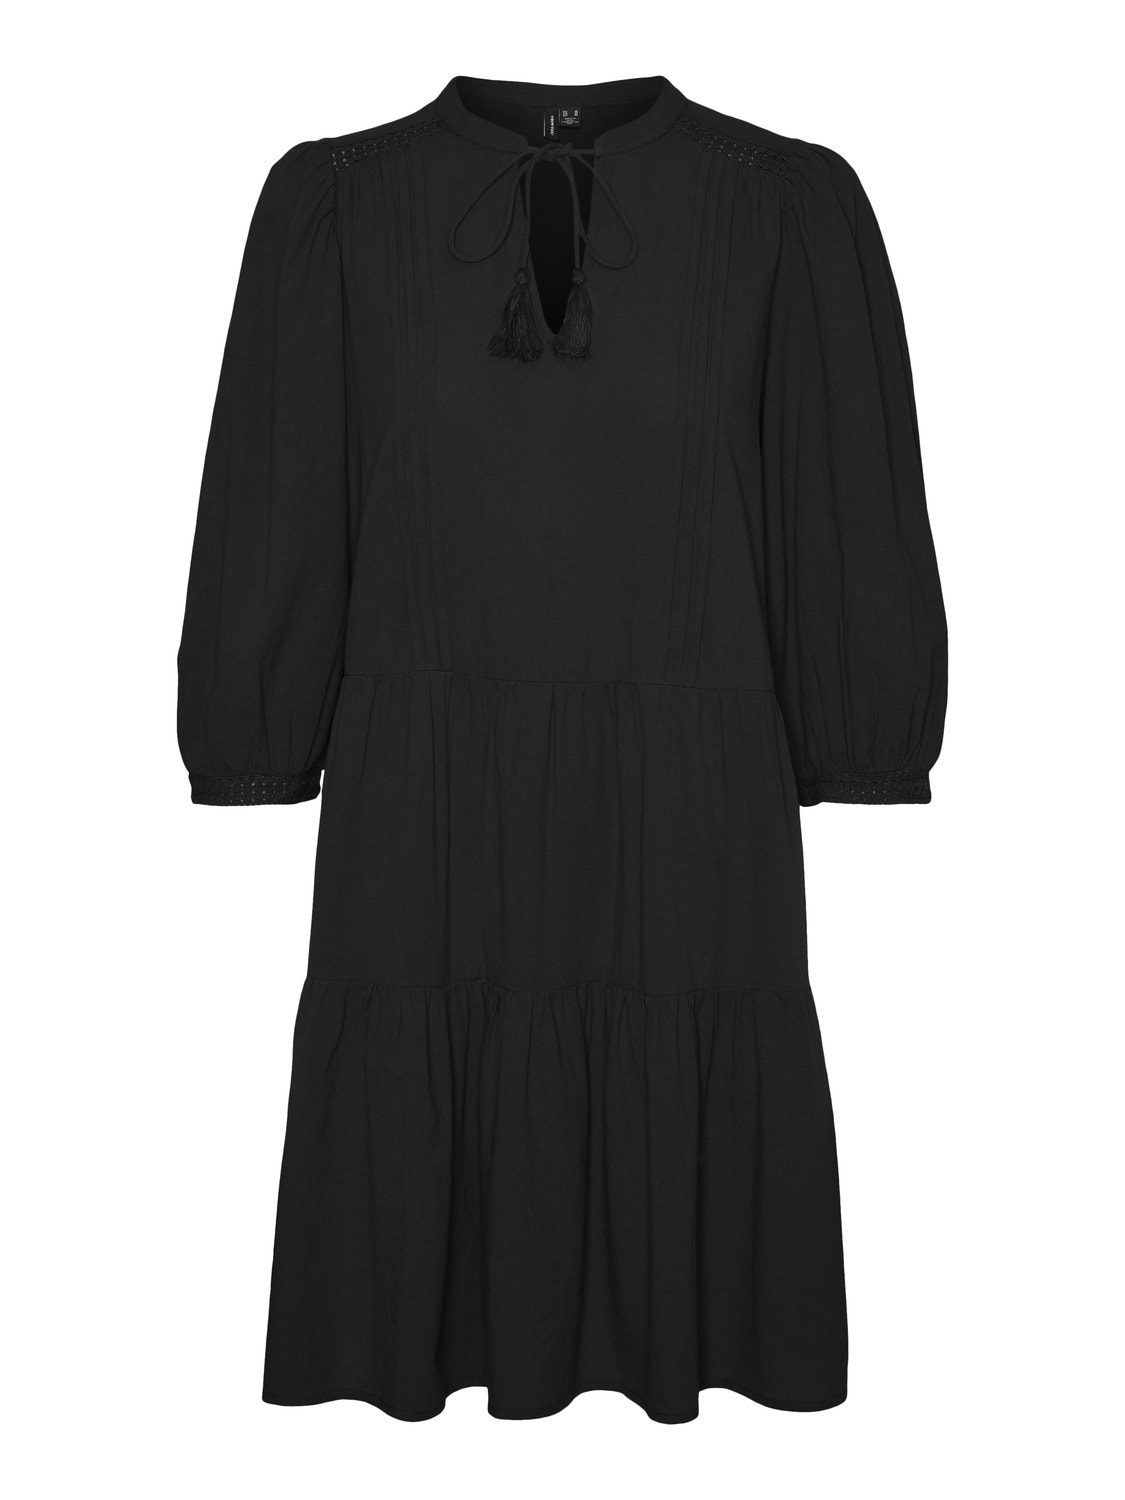 Vero Moda VMPRETTY Short dress -Black - 10279712